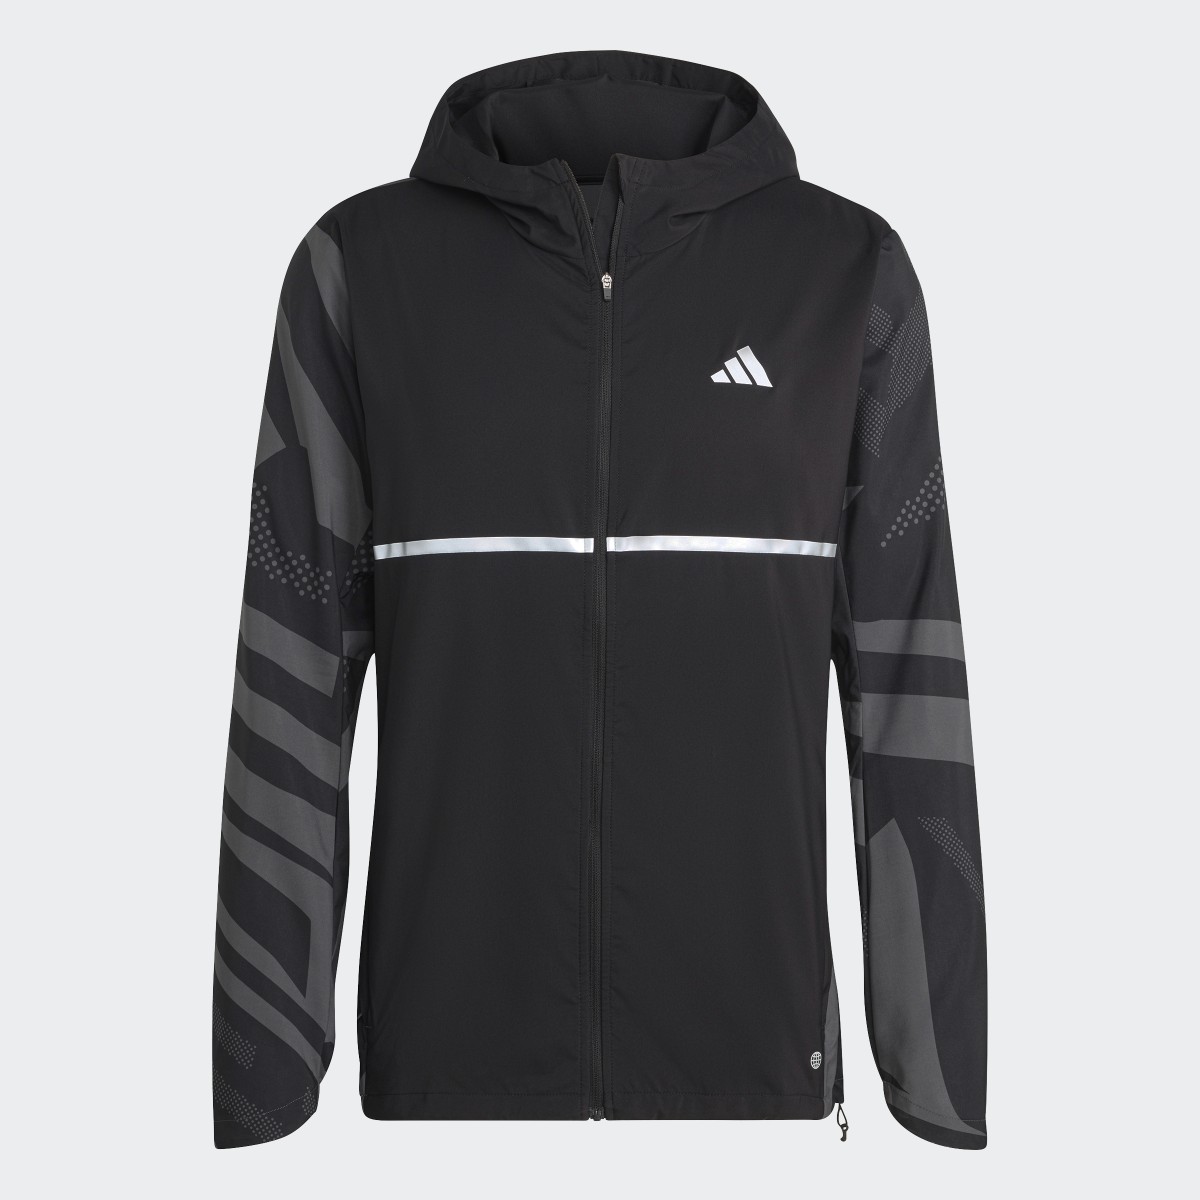 Adidas Own the Run Seasonal Jacket. 5